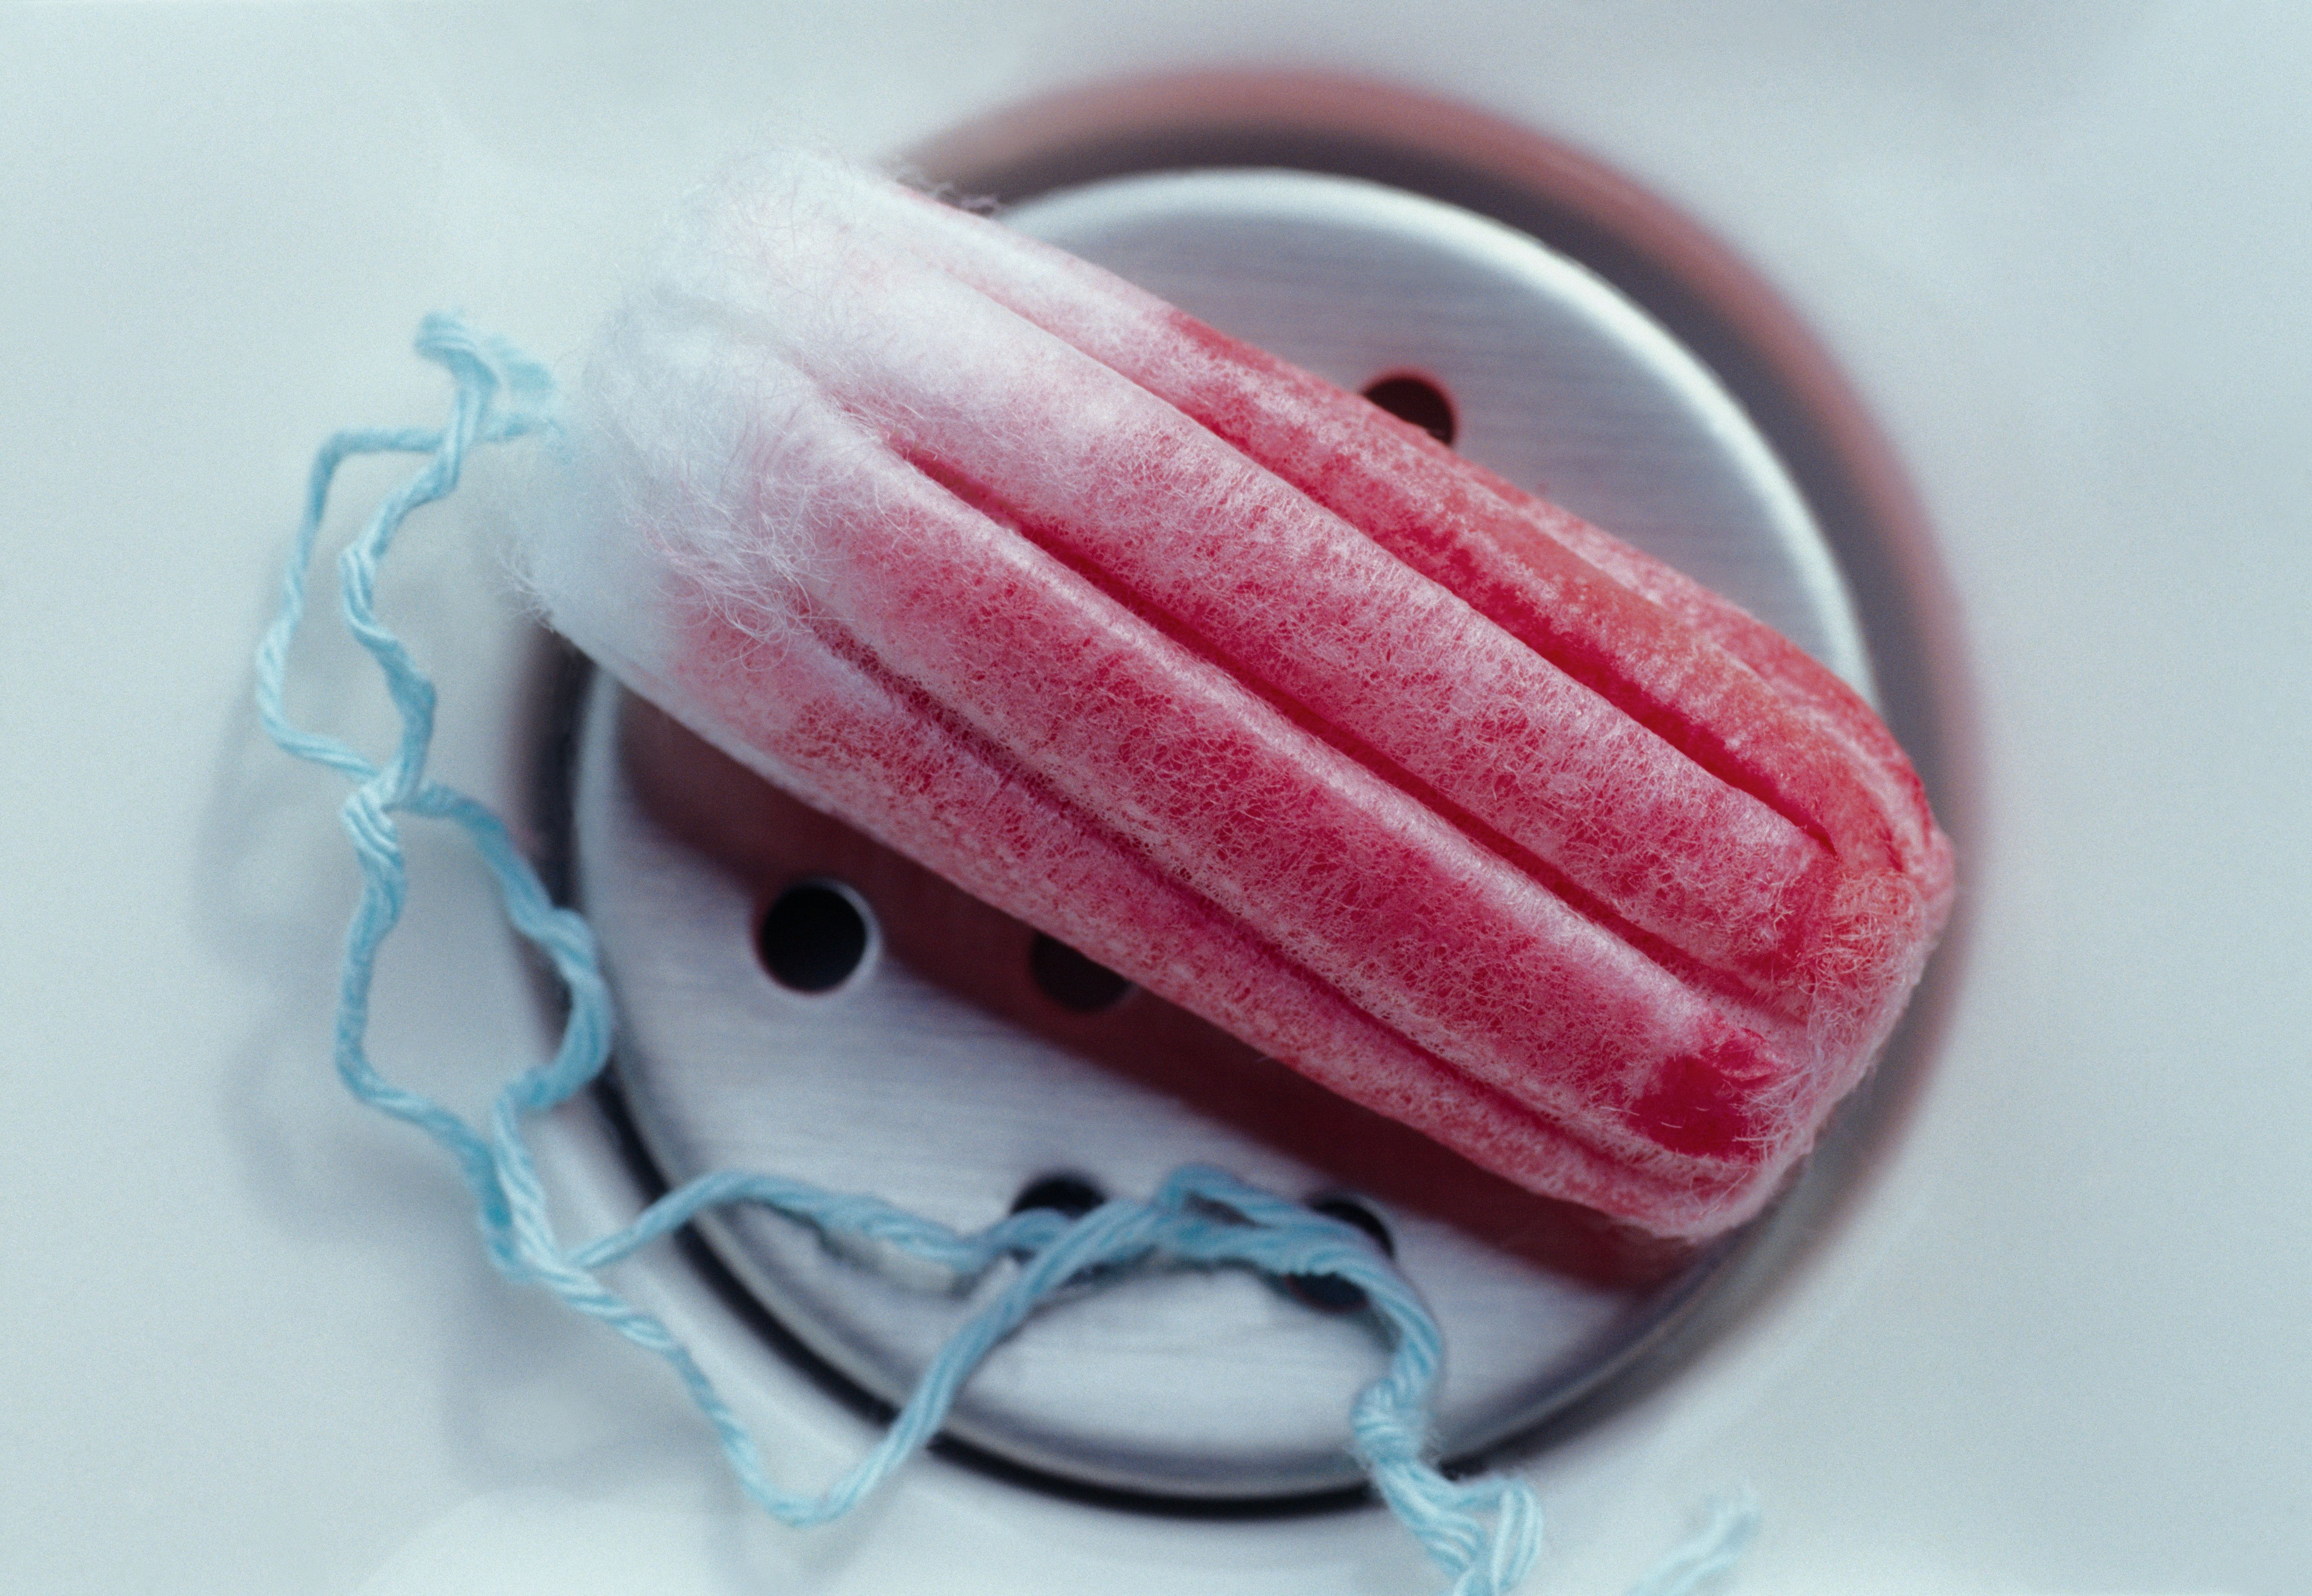 Pad menstruation used bloody tampon